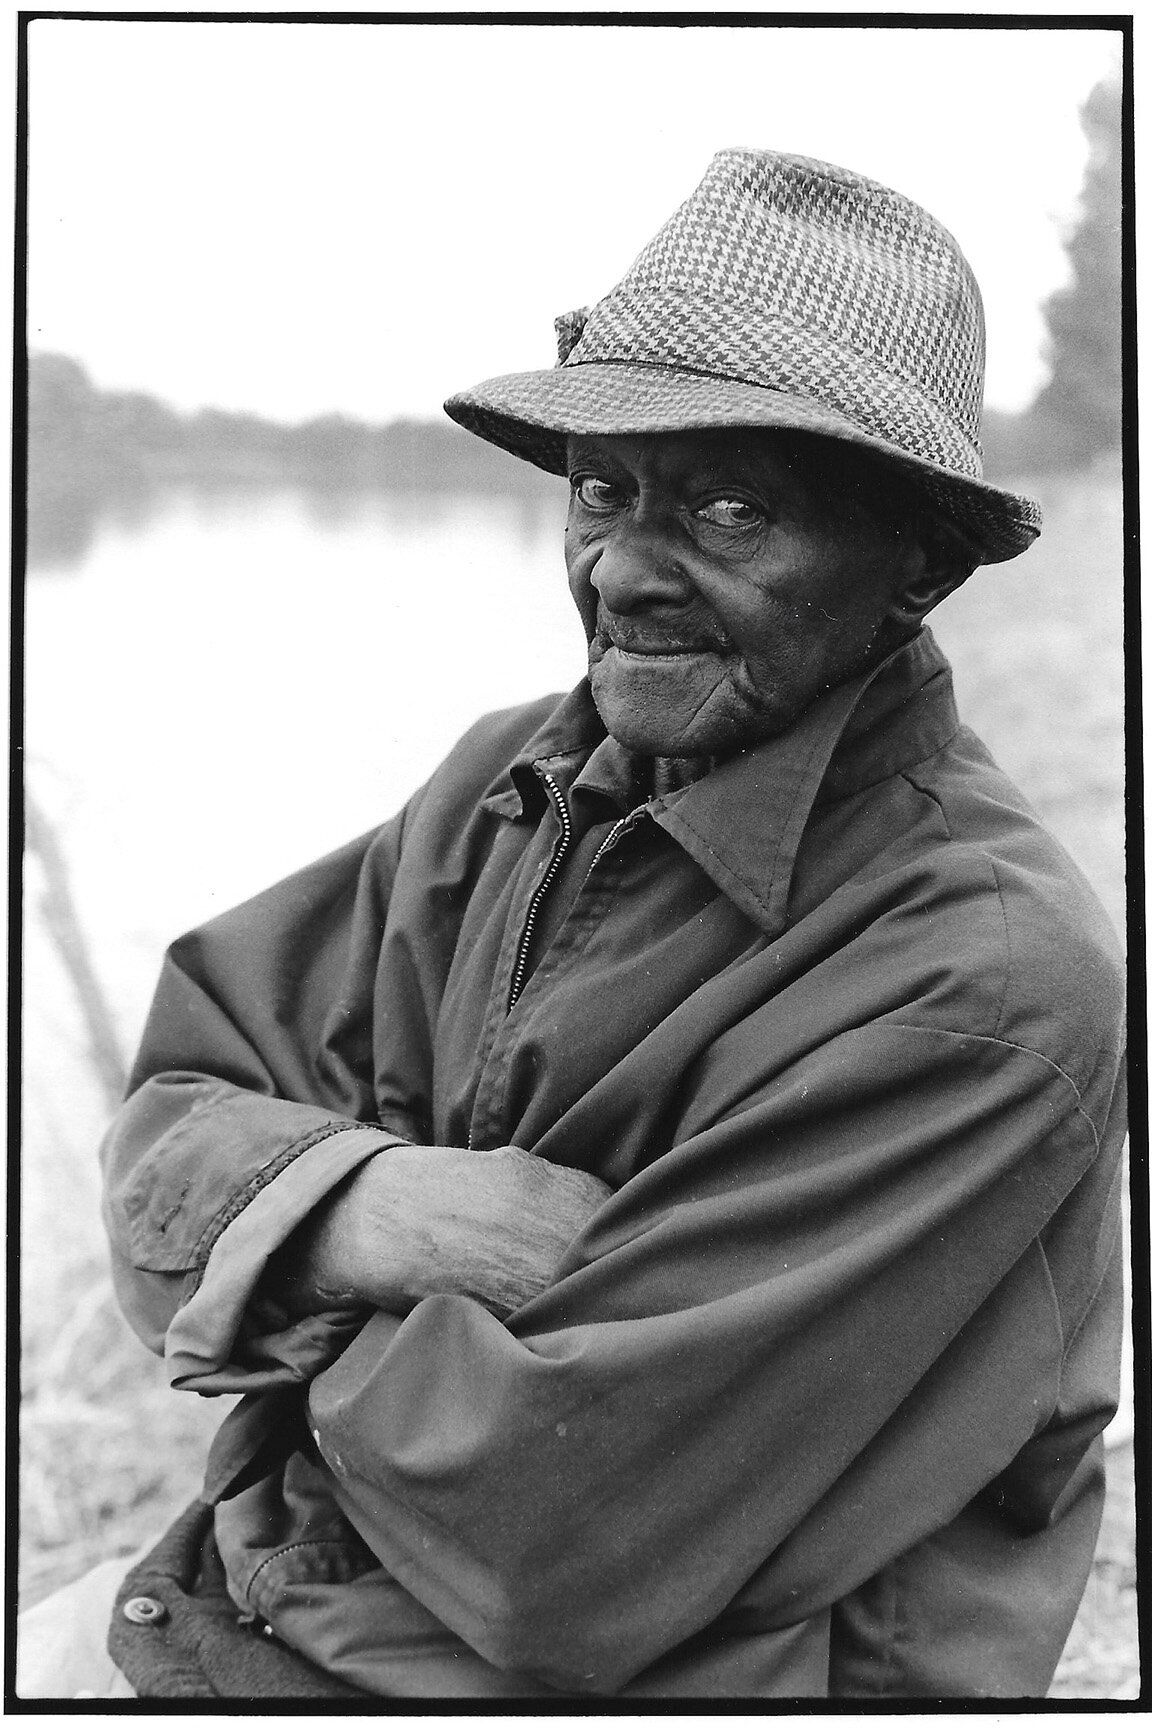   Man Fishing on the Flint River Near Bainbridge, GA  Image: 1980/printed: 2020 Gelatin silver print 7 1⁄2 x 5 1⁄8 in. (image size) The Do Good Fund, Inc.,2020-049 